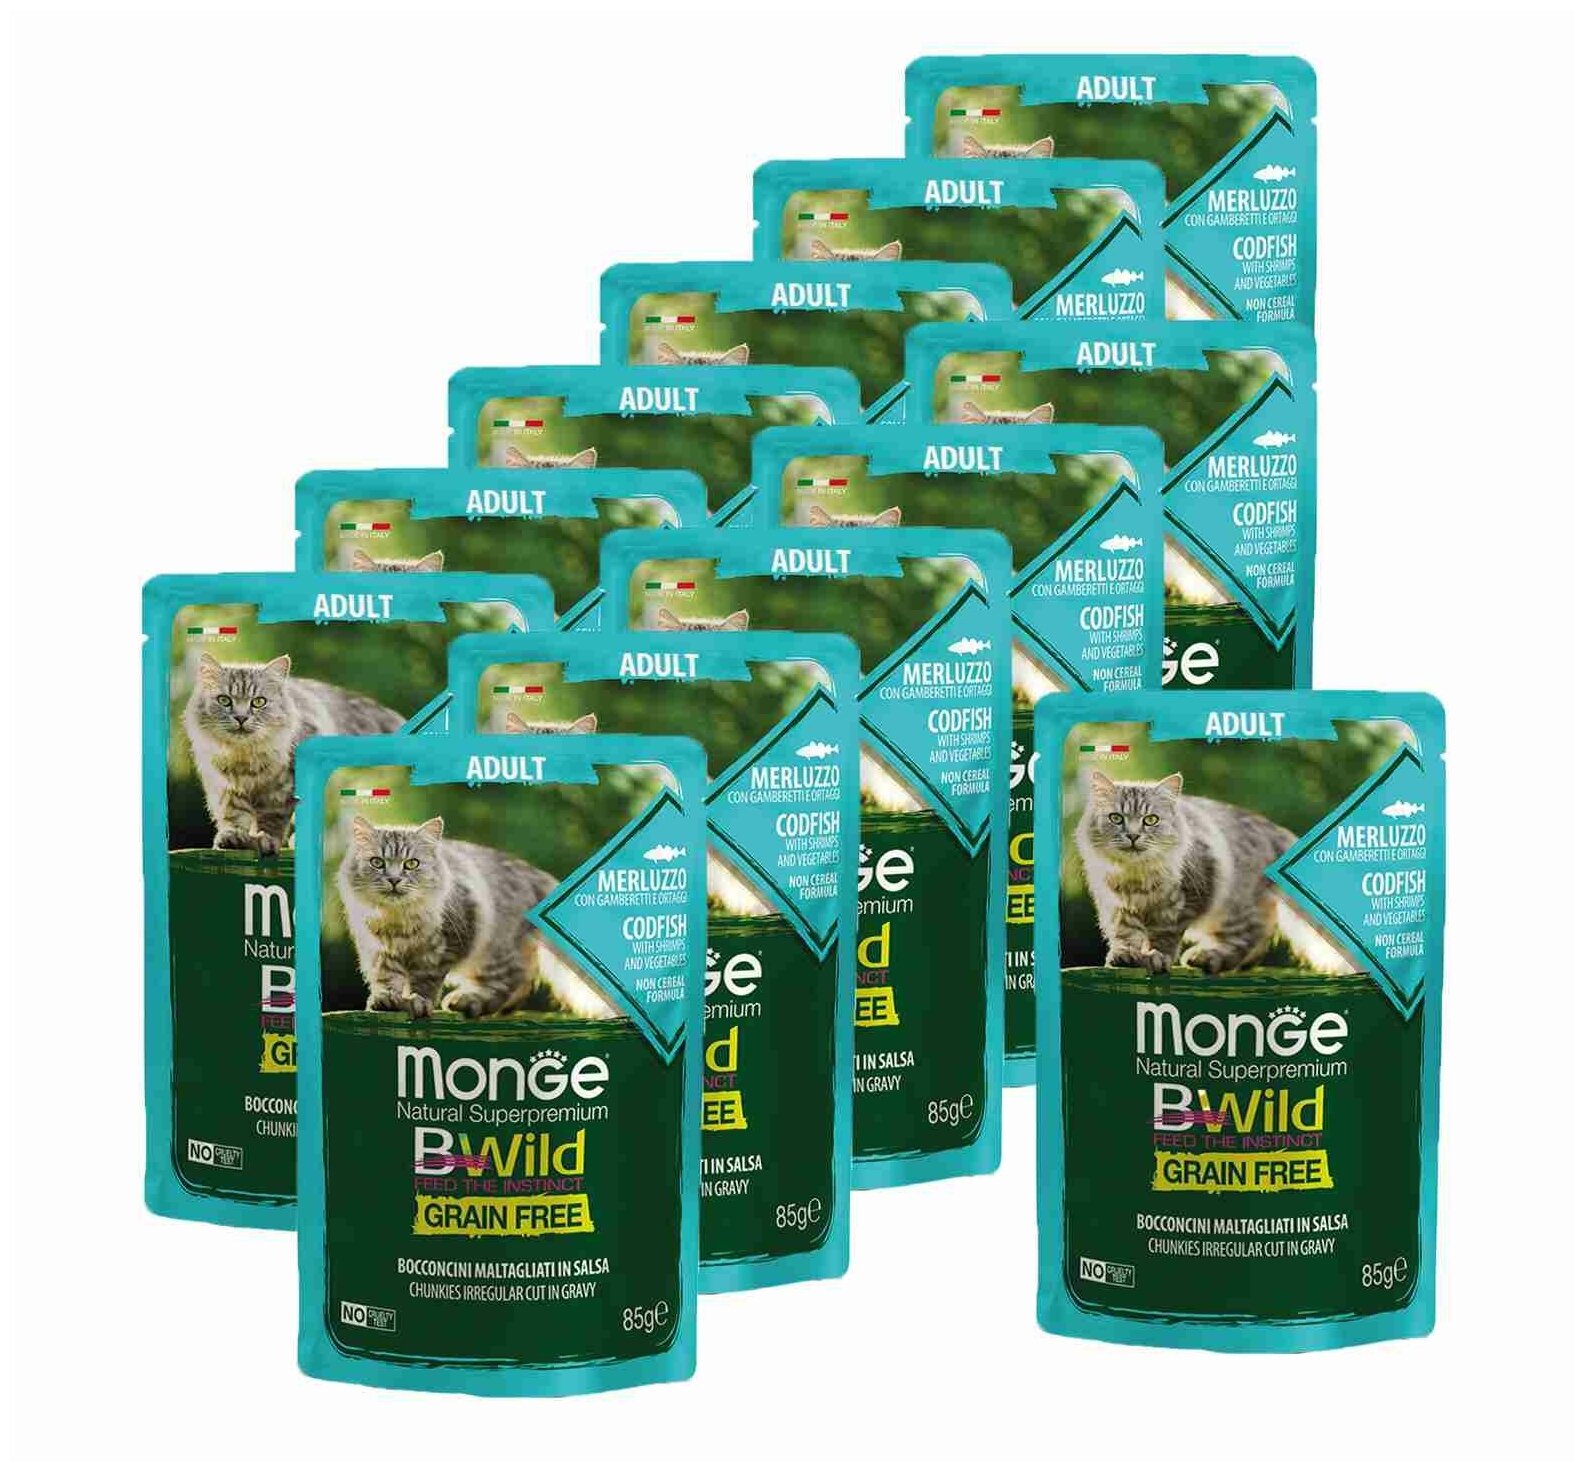 Monge Cat BWild GRAIN FREE паучи из трески с креветками и овощами для взрослых кошек 85г х 12 шт.